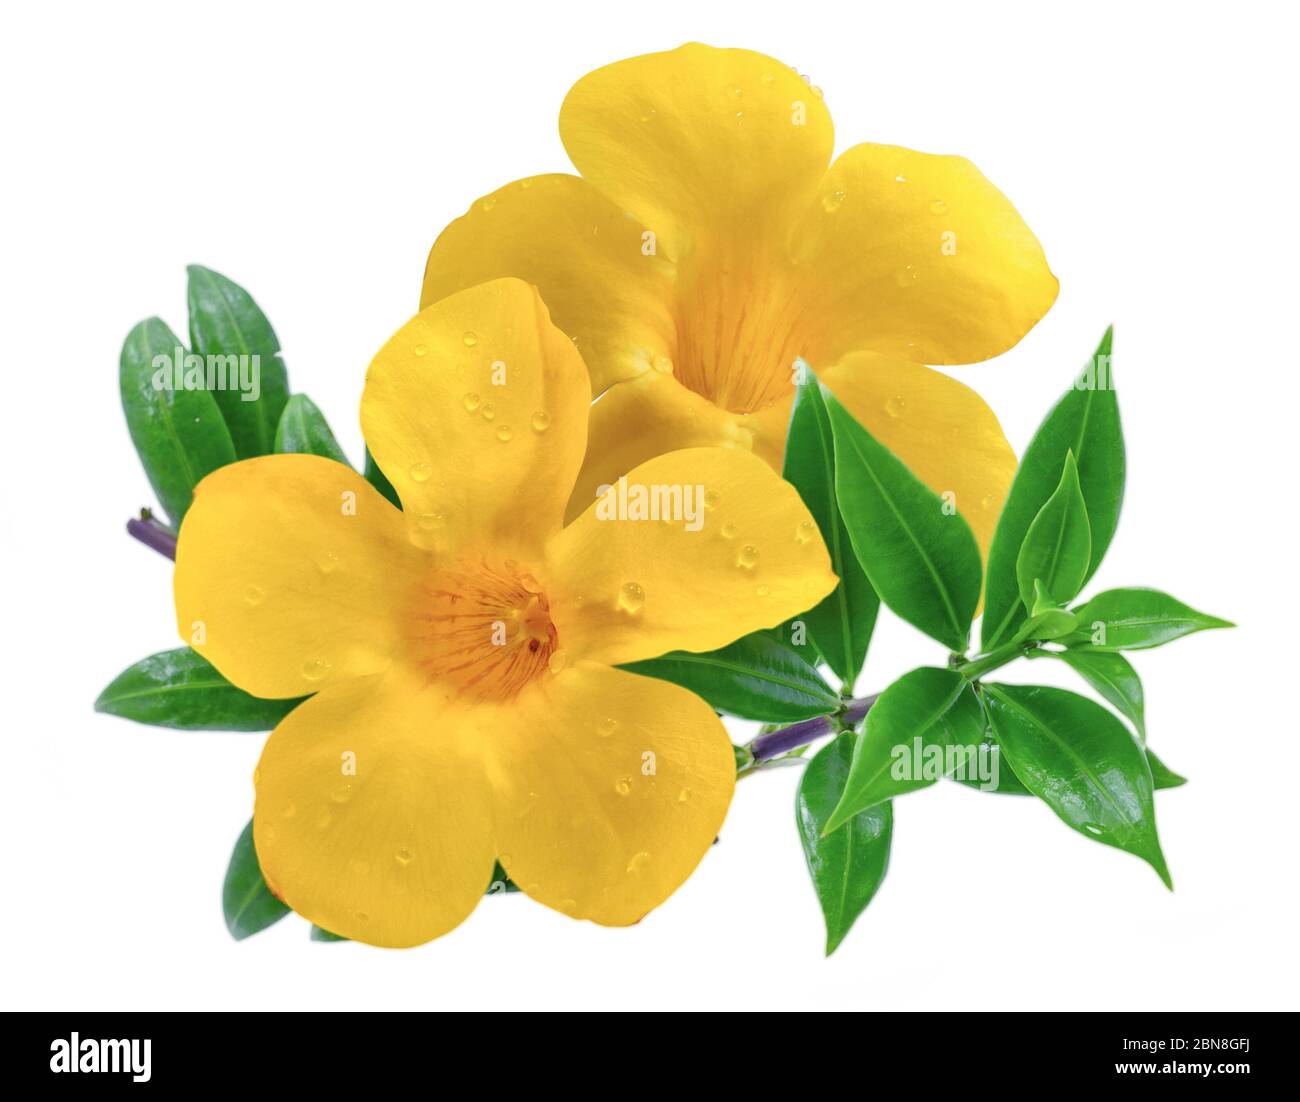 Allamanda flower or golden trumpet isolated on white background Stock Photo